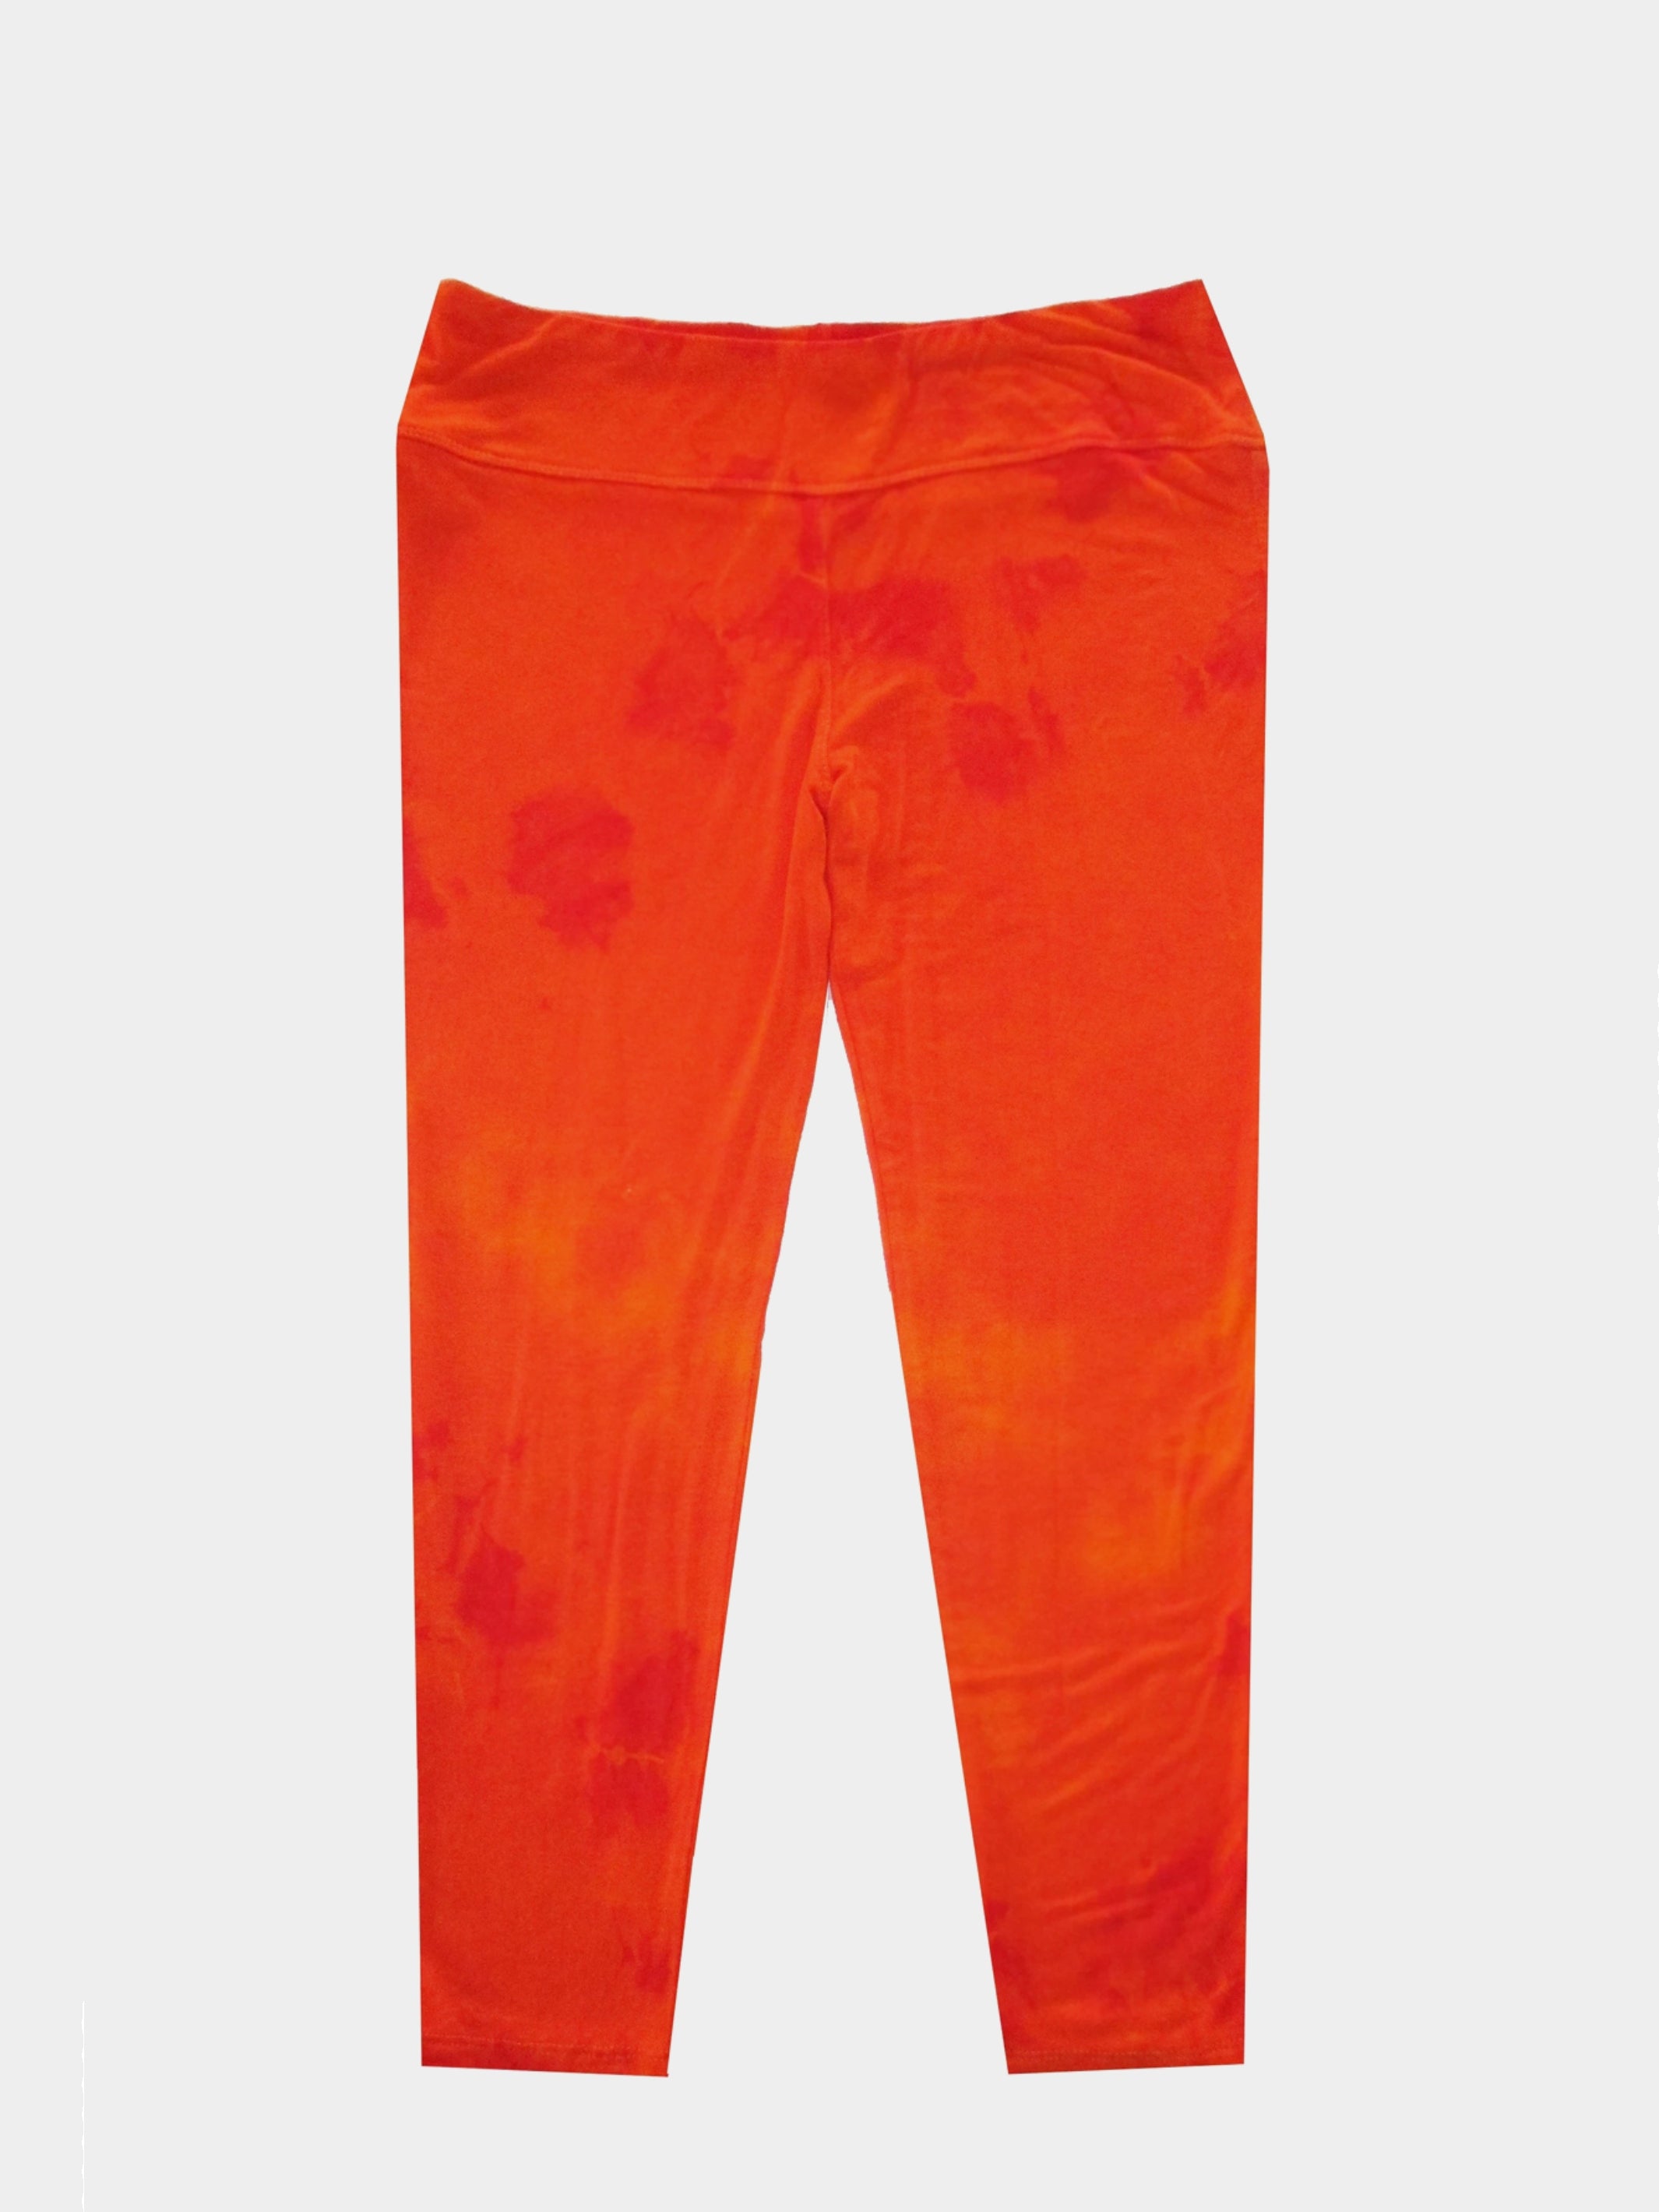 Capri Leggings - Orange Tie Dye